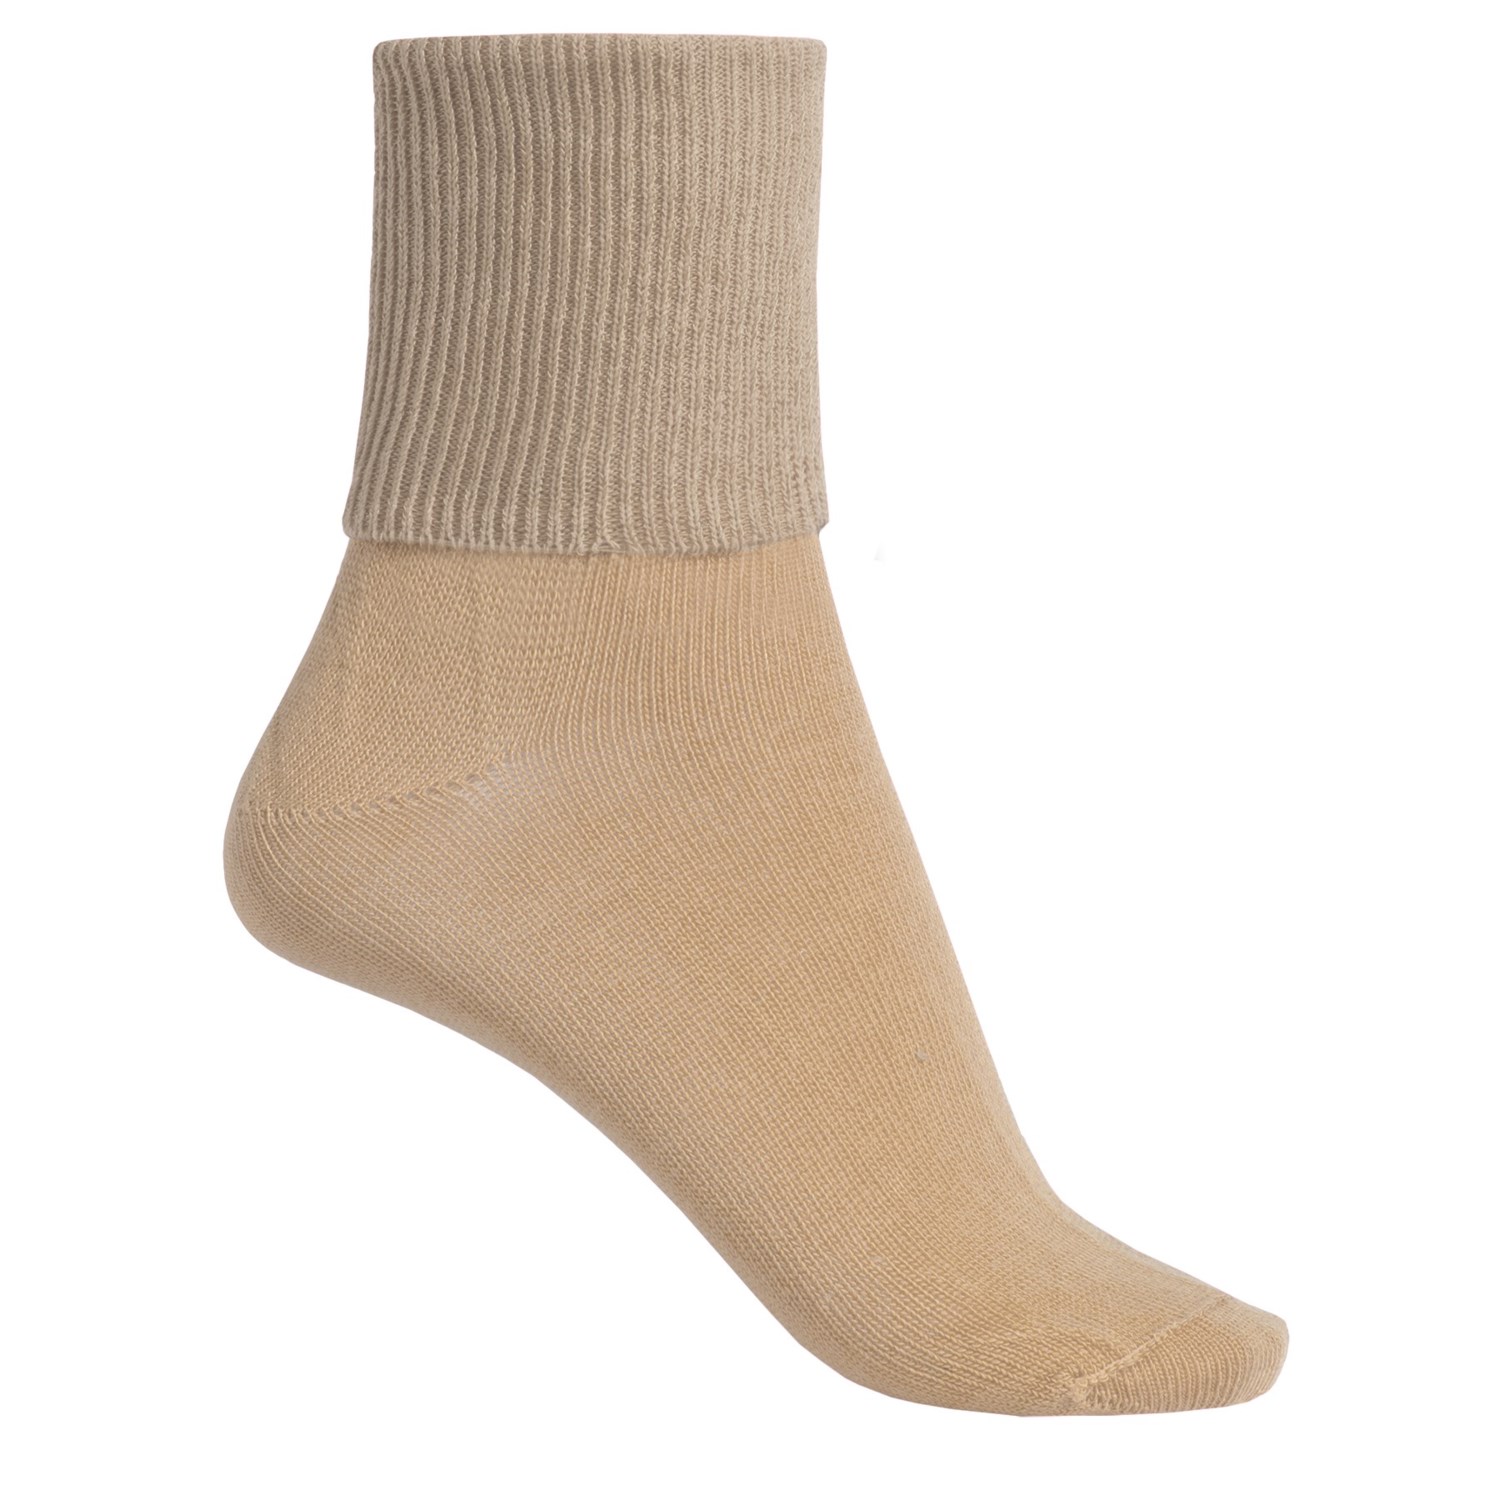 Wigwam Breeze II Socks (For Women) 172MC - Save 57%